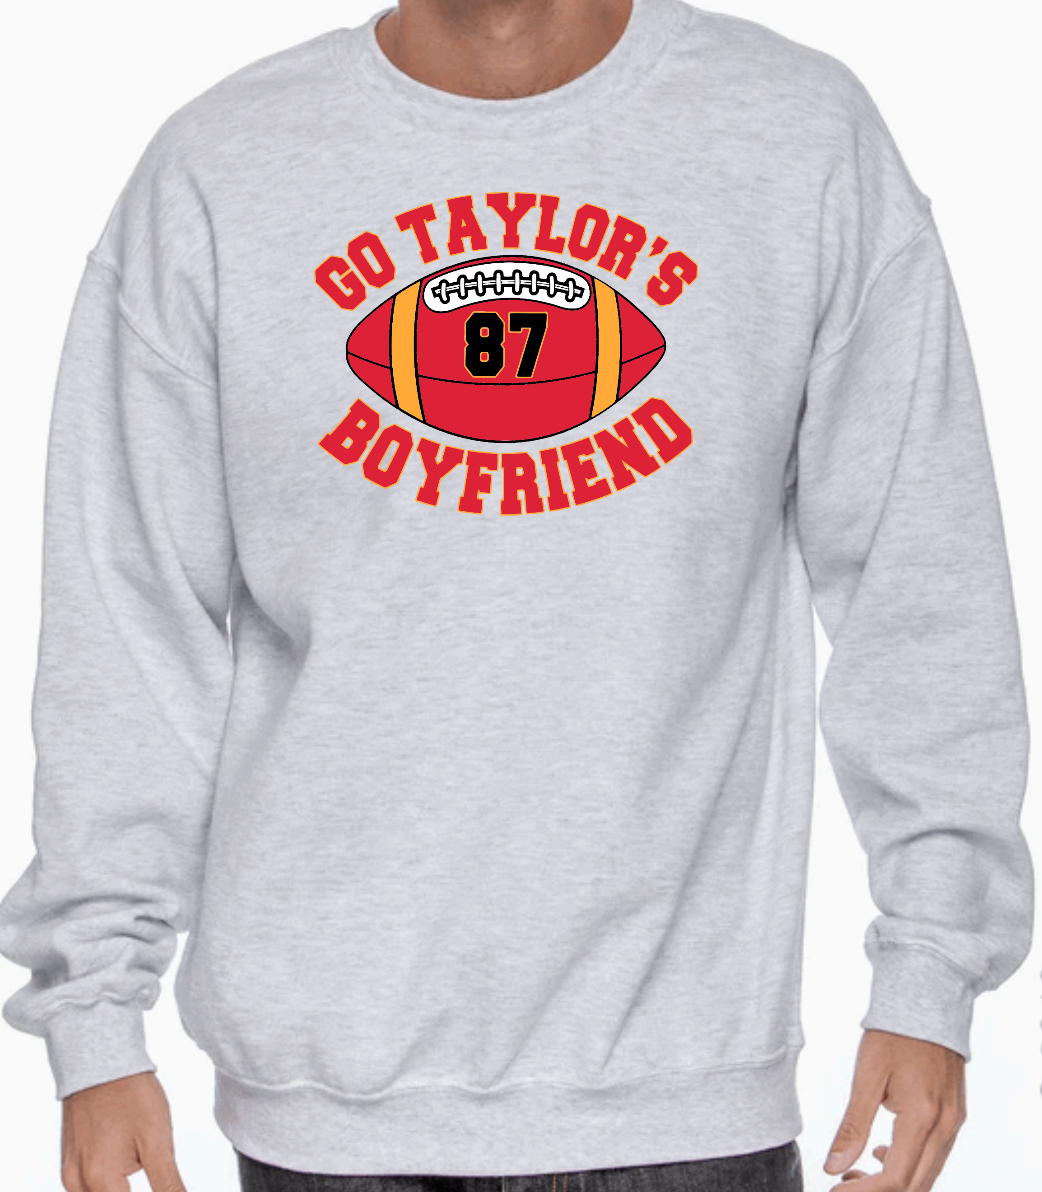 Go Taylor's Boyfriend Top